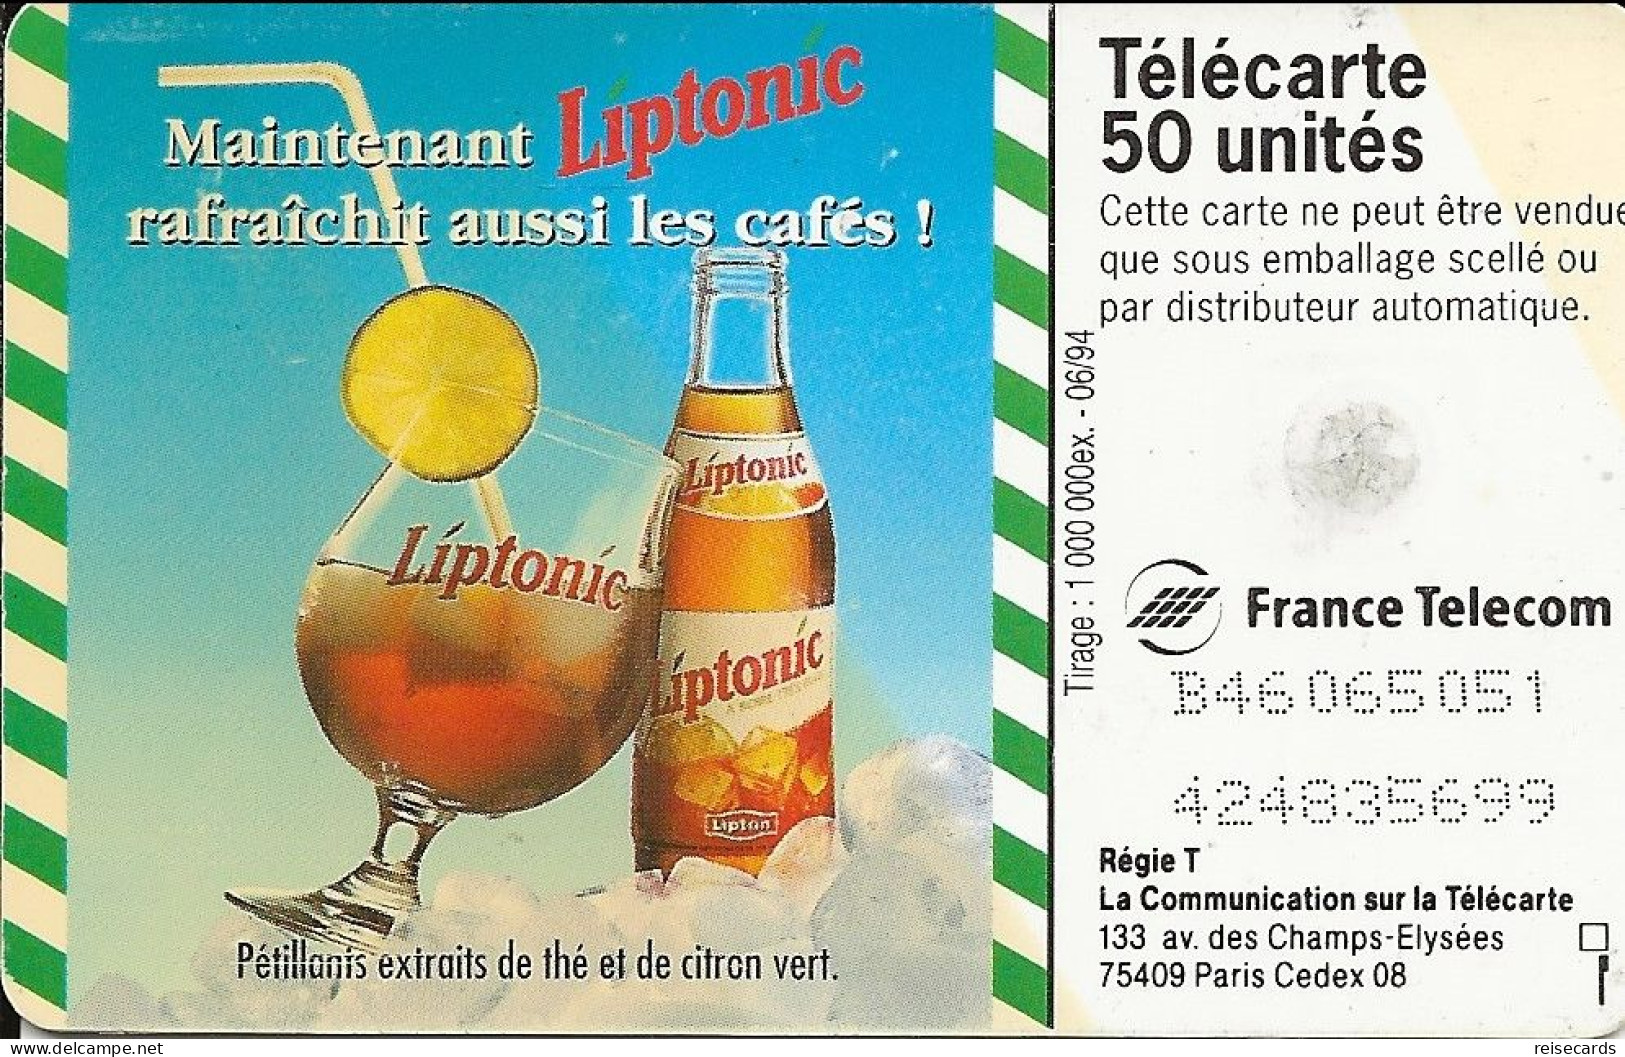 France: France Telecom 06/94 F481 Liptonic - J. Connors - 1994